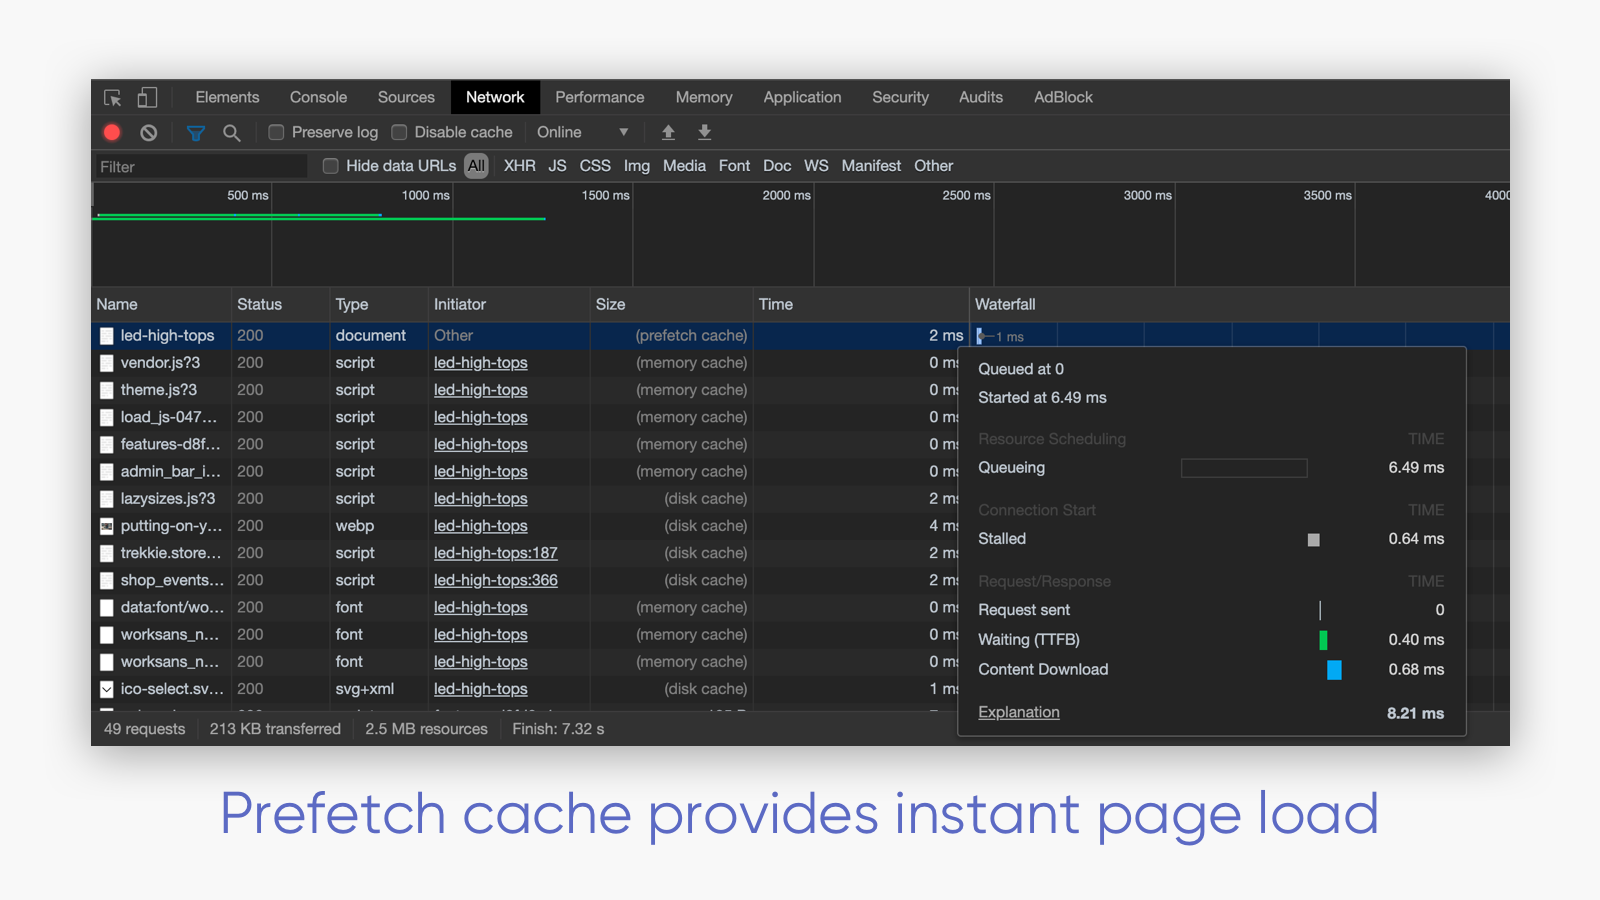 Prefetch cache provides instant page load